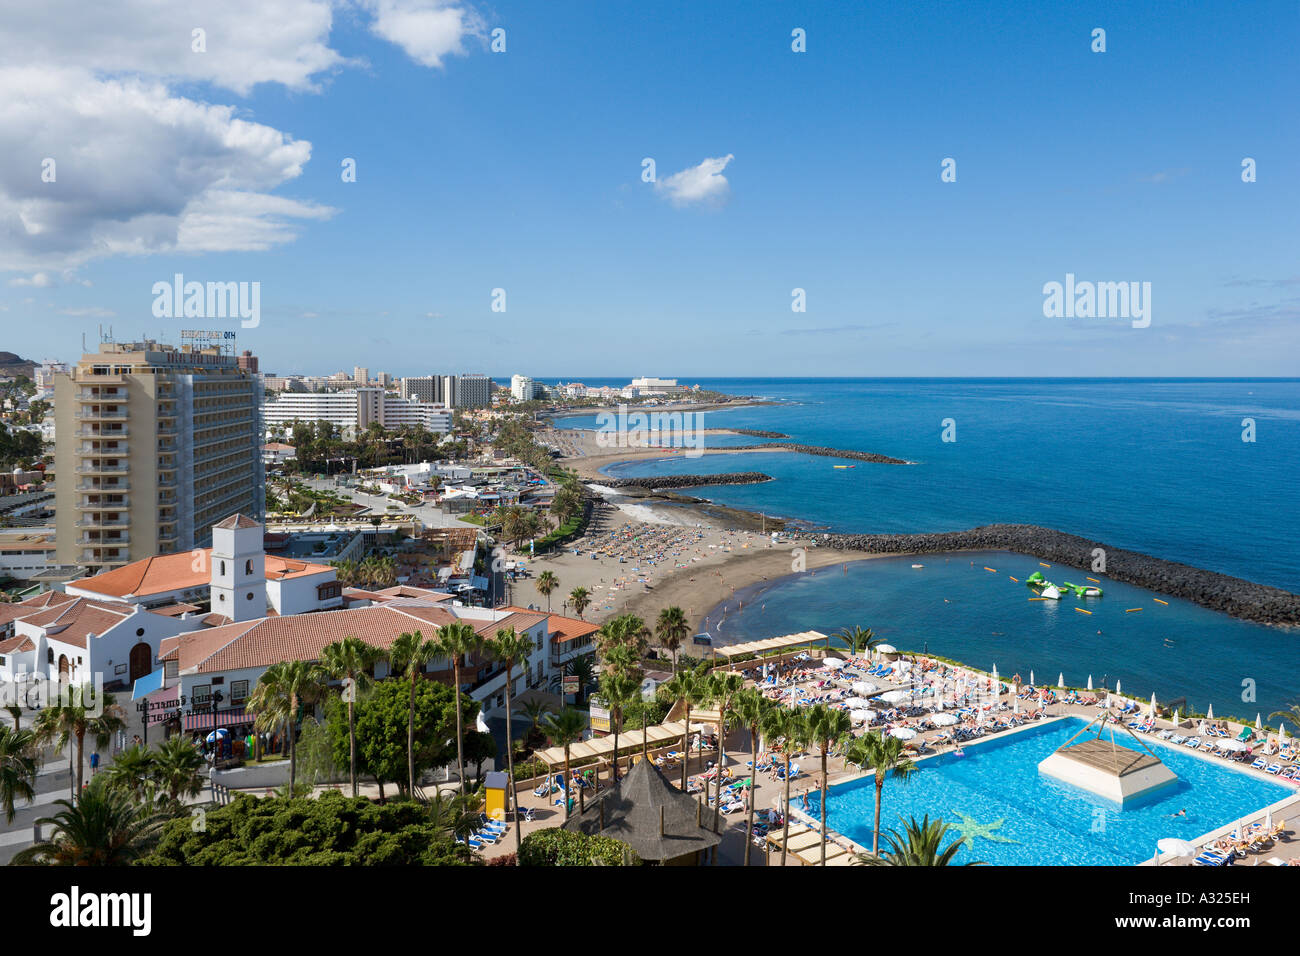 Tenerife playa de las americas hi-res stock photography and images - Alamy